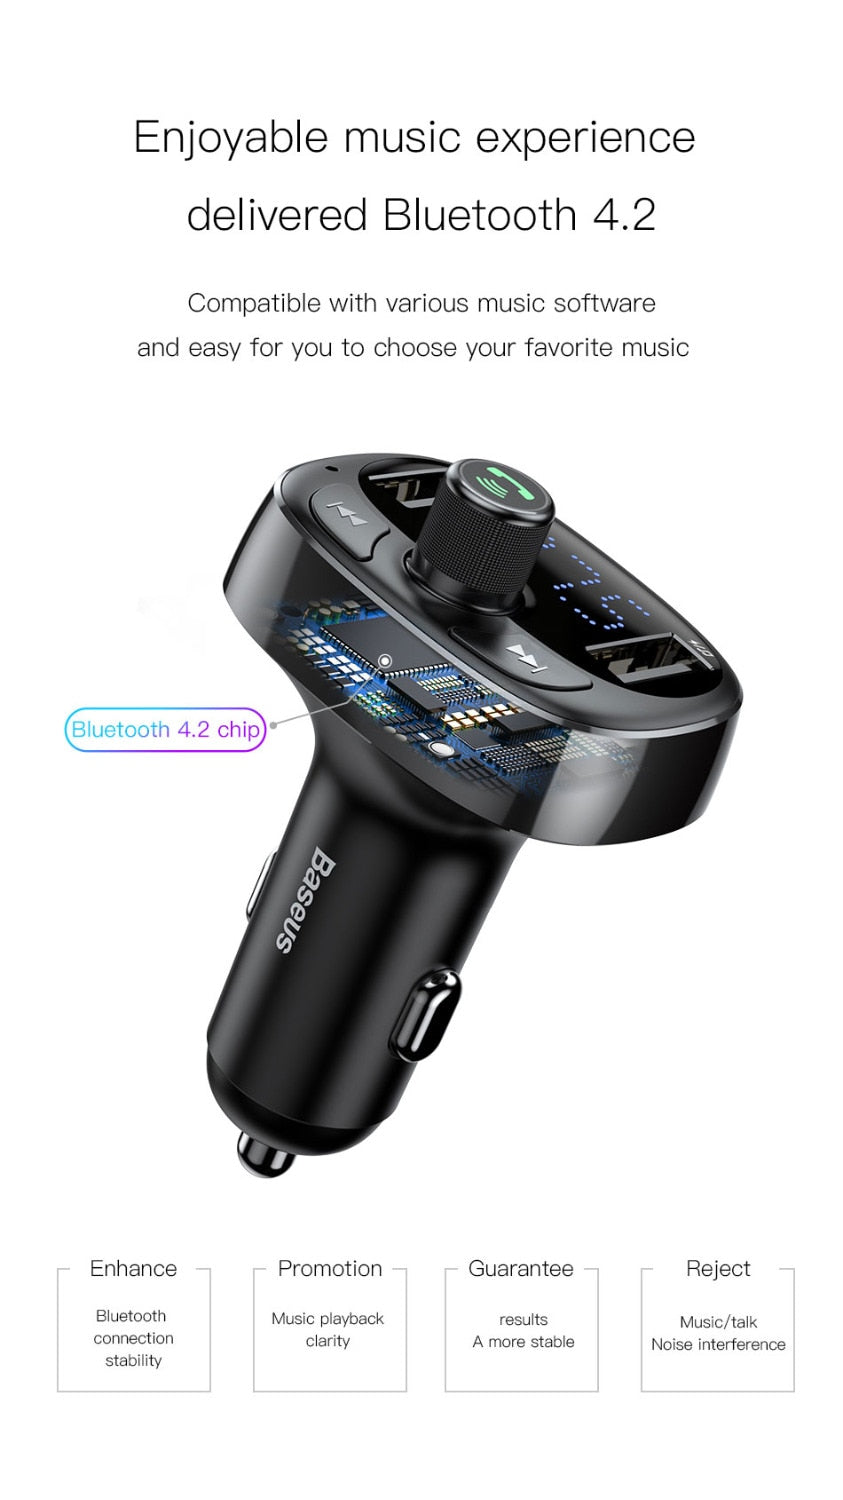 Baseus FM Transmitter Modulator Bluetooth Handsfree Car Kit Audio MP3 Player with 3.4A Dual USB Car FM Transmittor Phone Charger